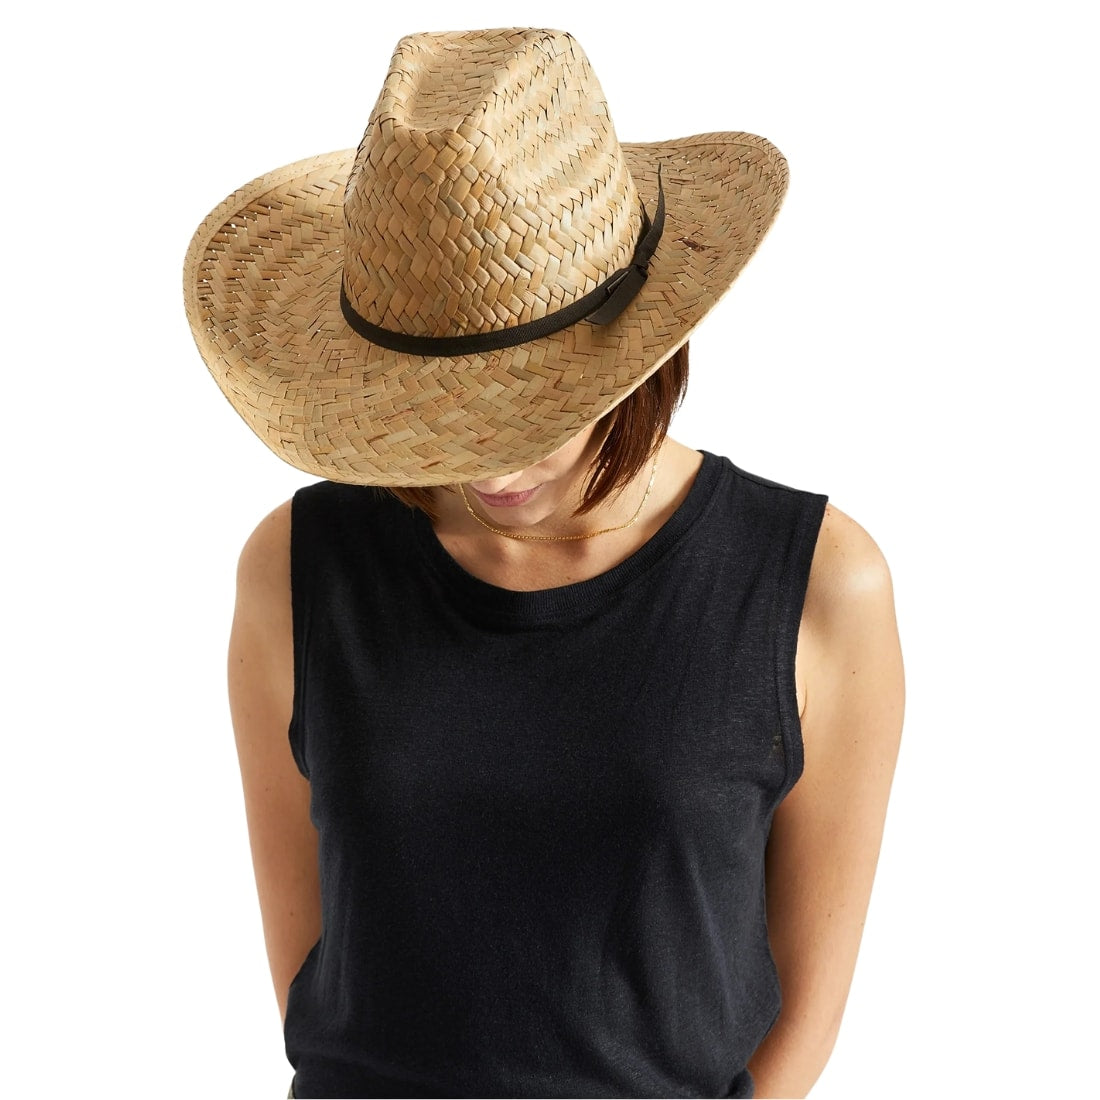 Brixton Houston Straw Cowboy Hat - Natural